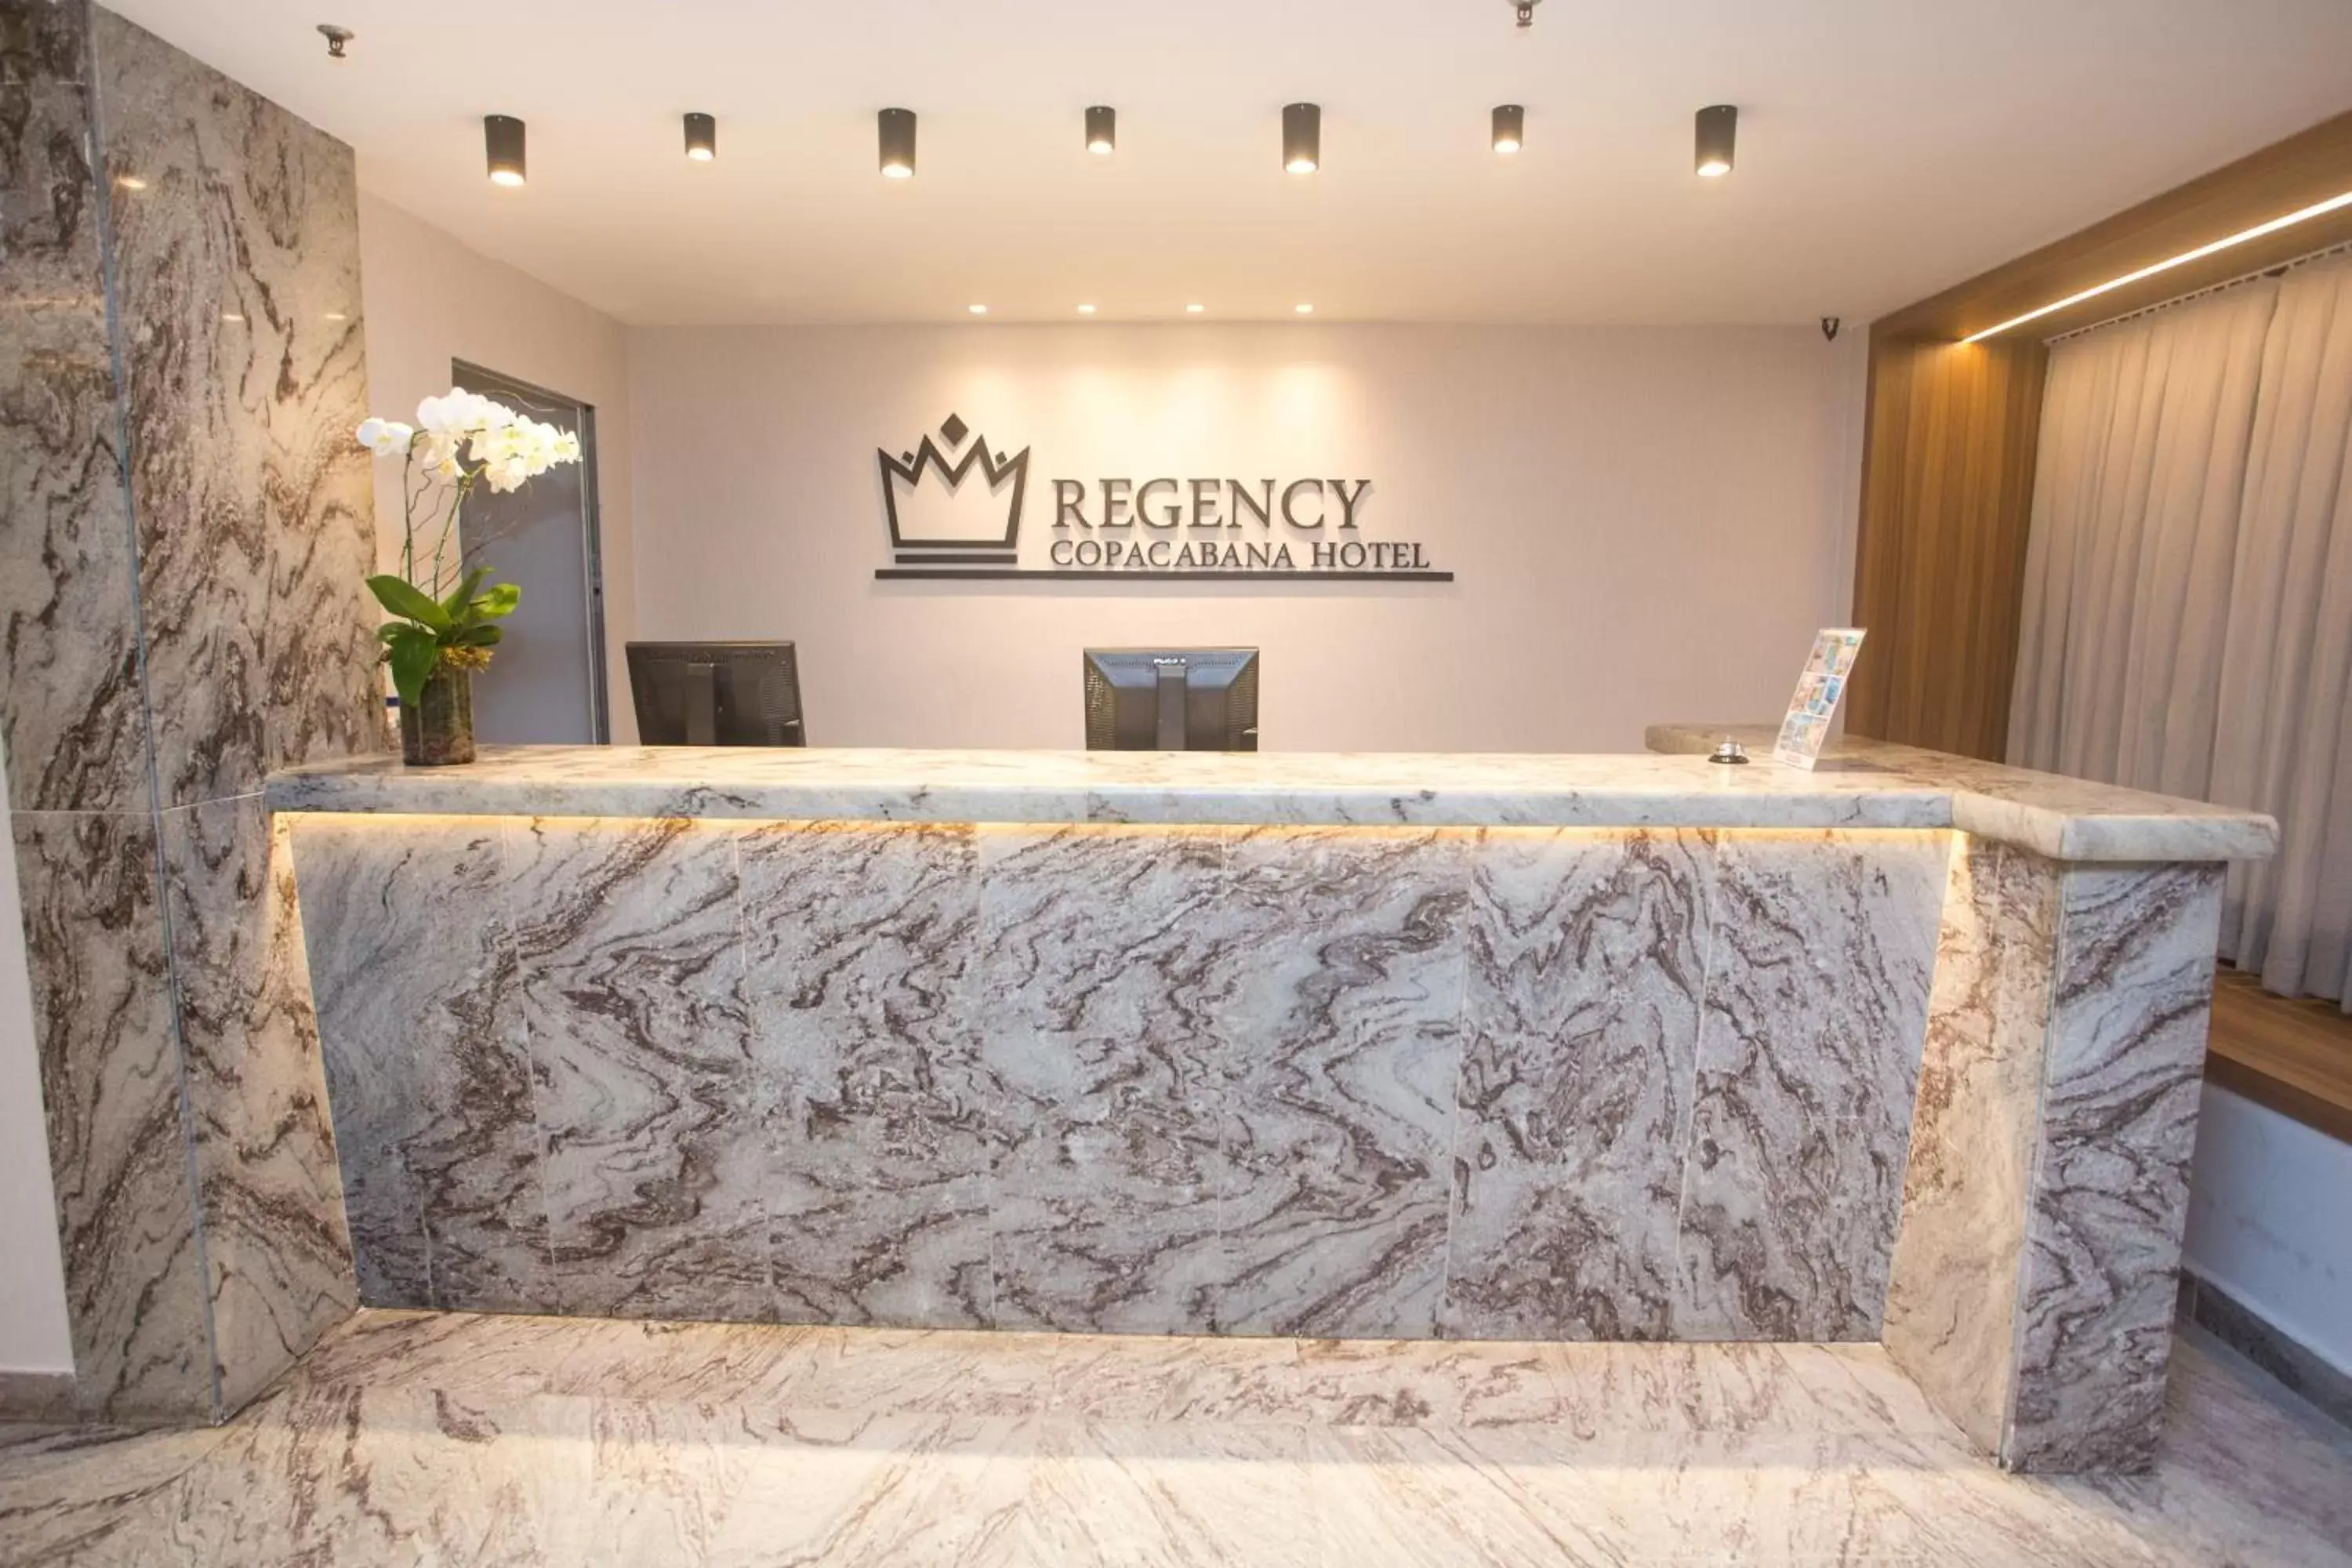 Lobby or reception, Lobby/Reception in Regency Copacabana Hotel